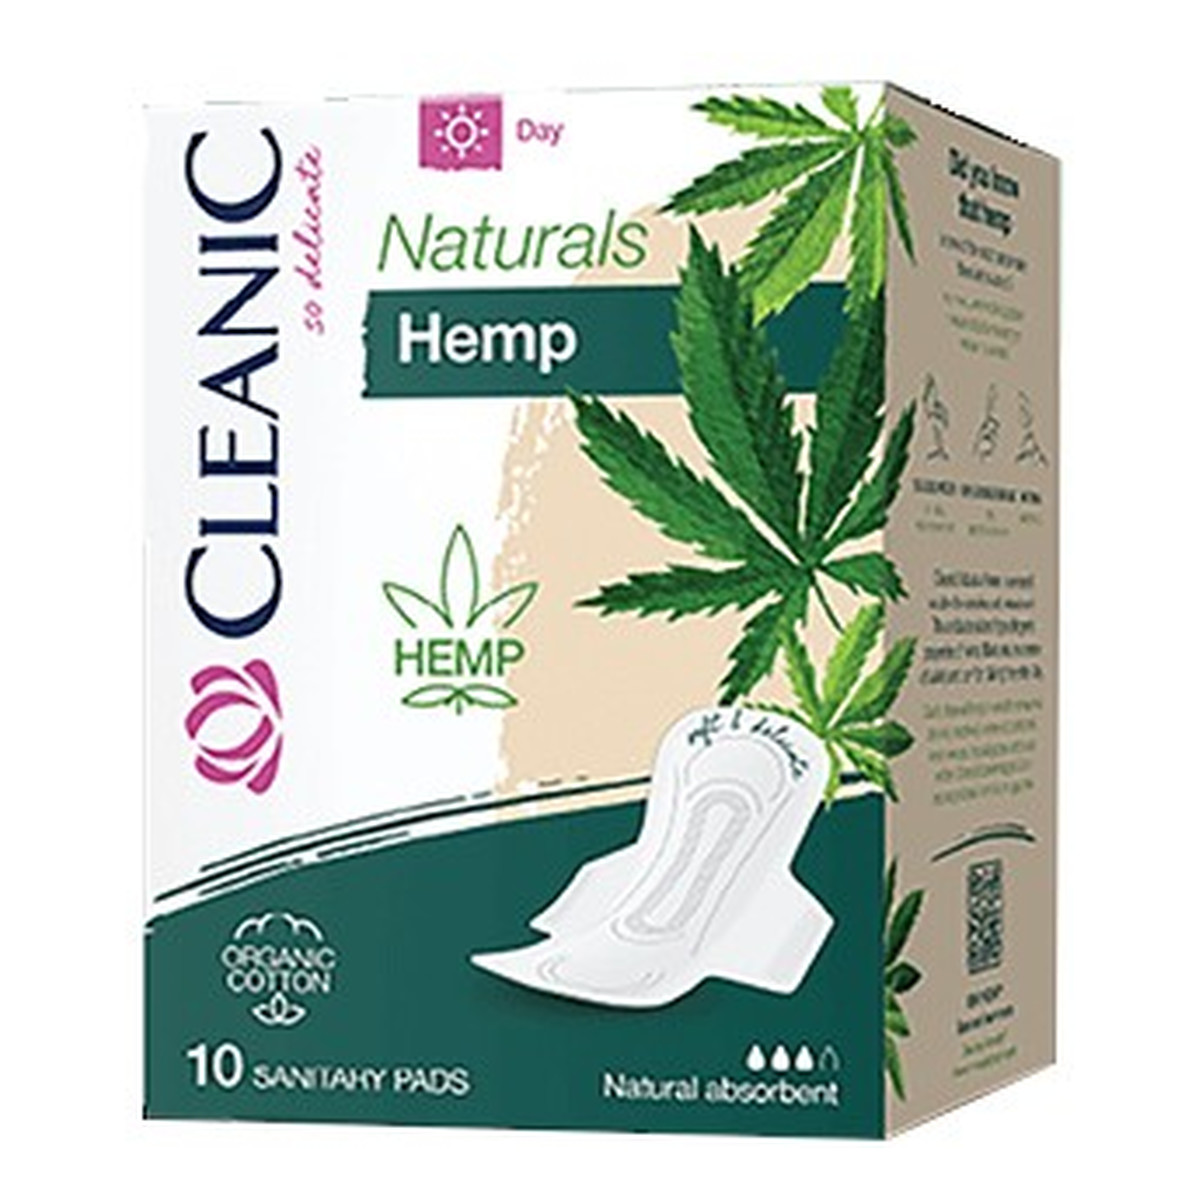 Cleanic Naturals Hemp Podpaski higieniczne Organic - na dzień 10szt